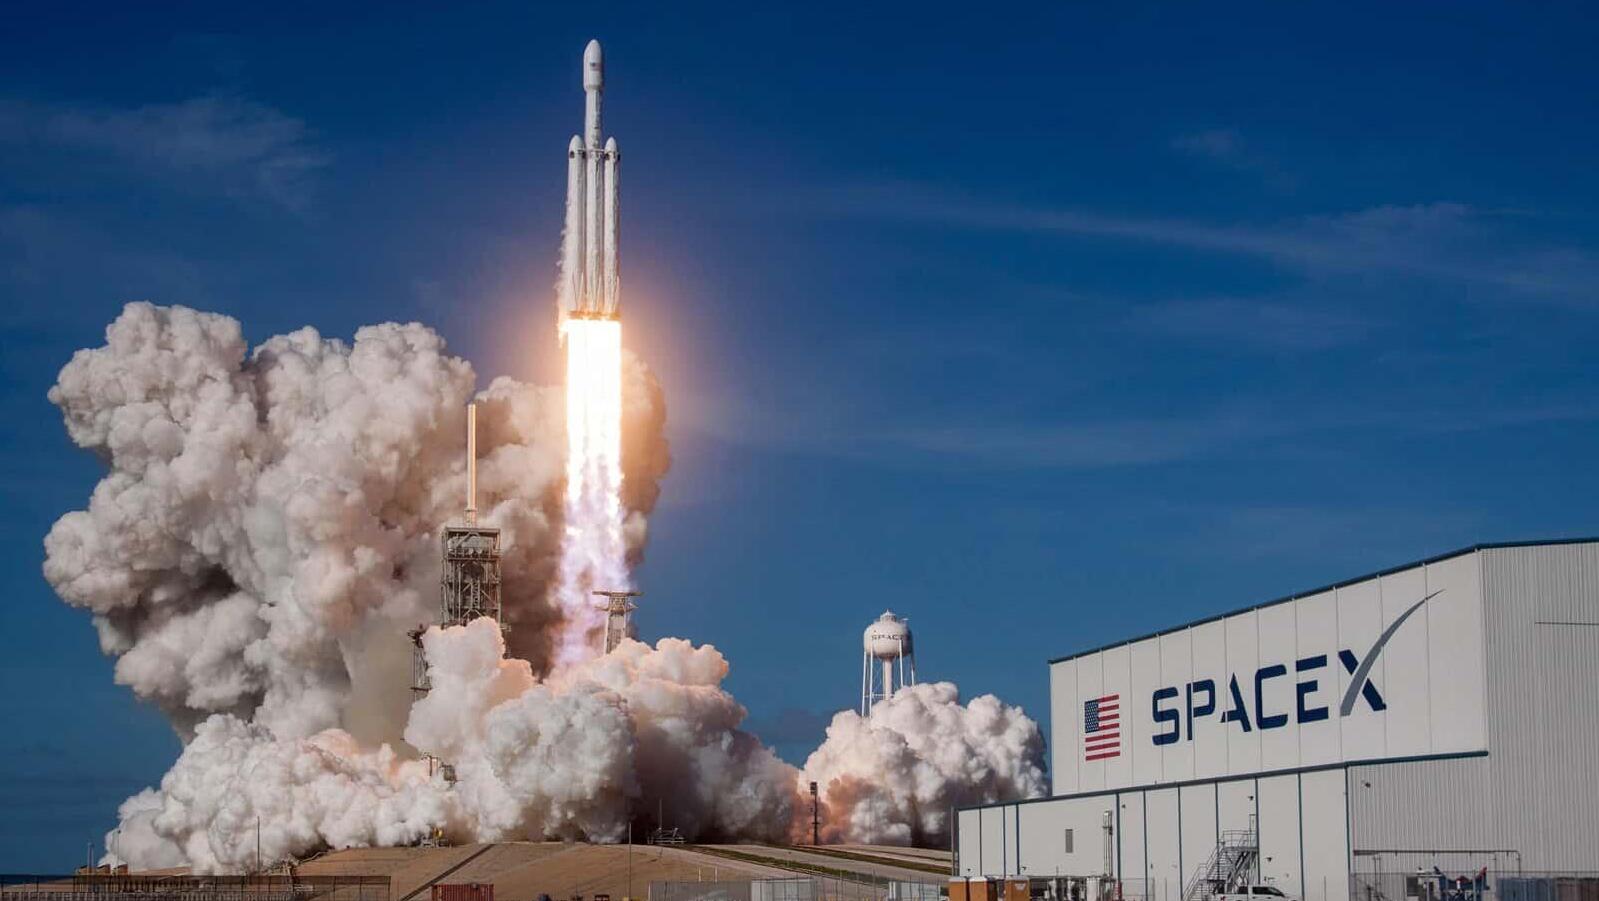 SpaceX ספייס X שיגור ממרכז החלל קנדי פלורידה